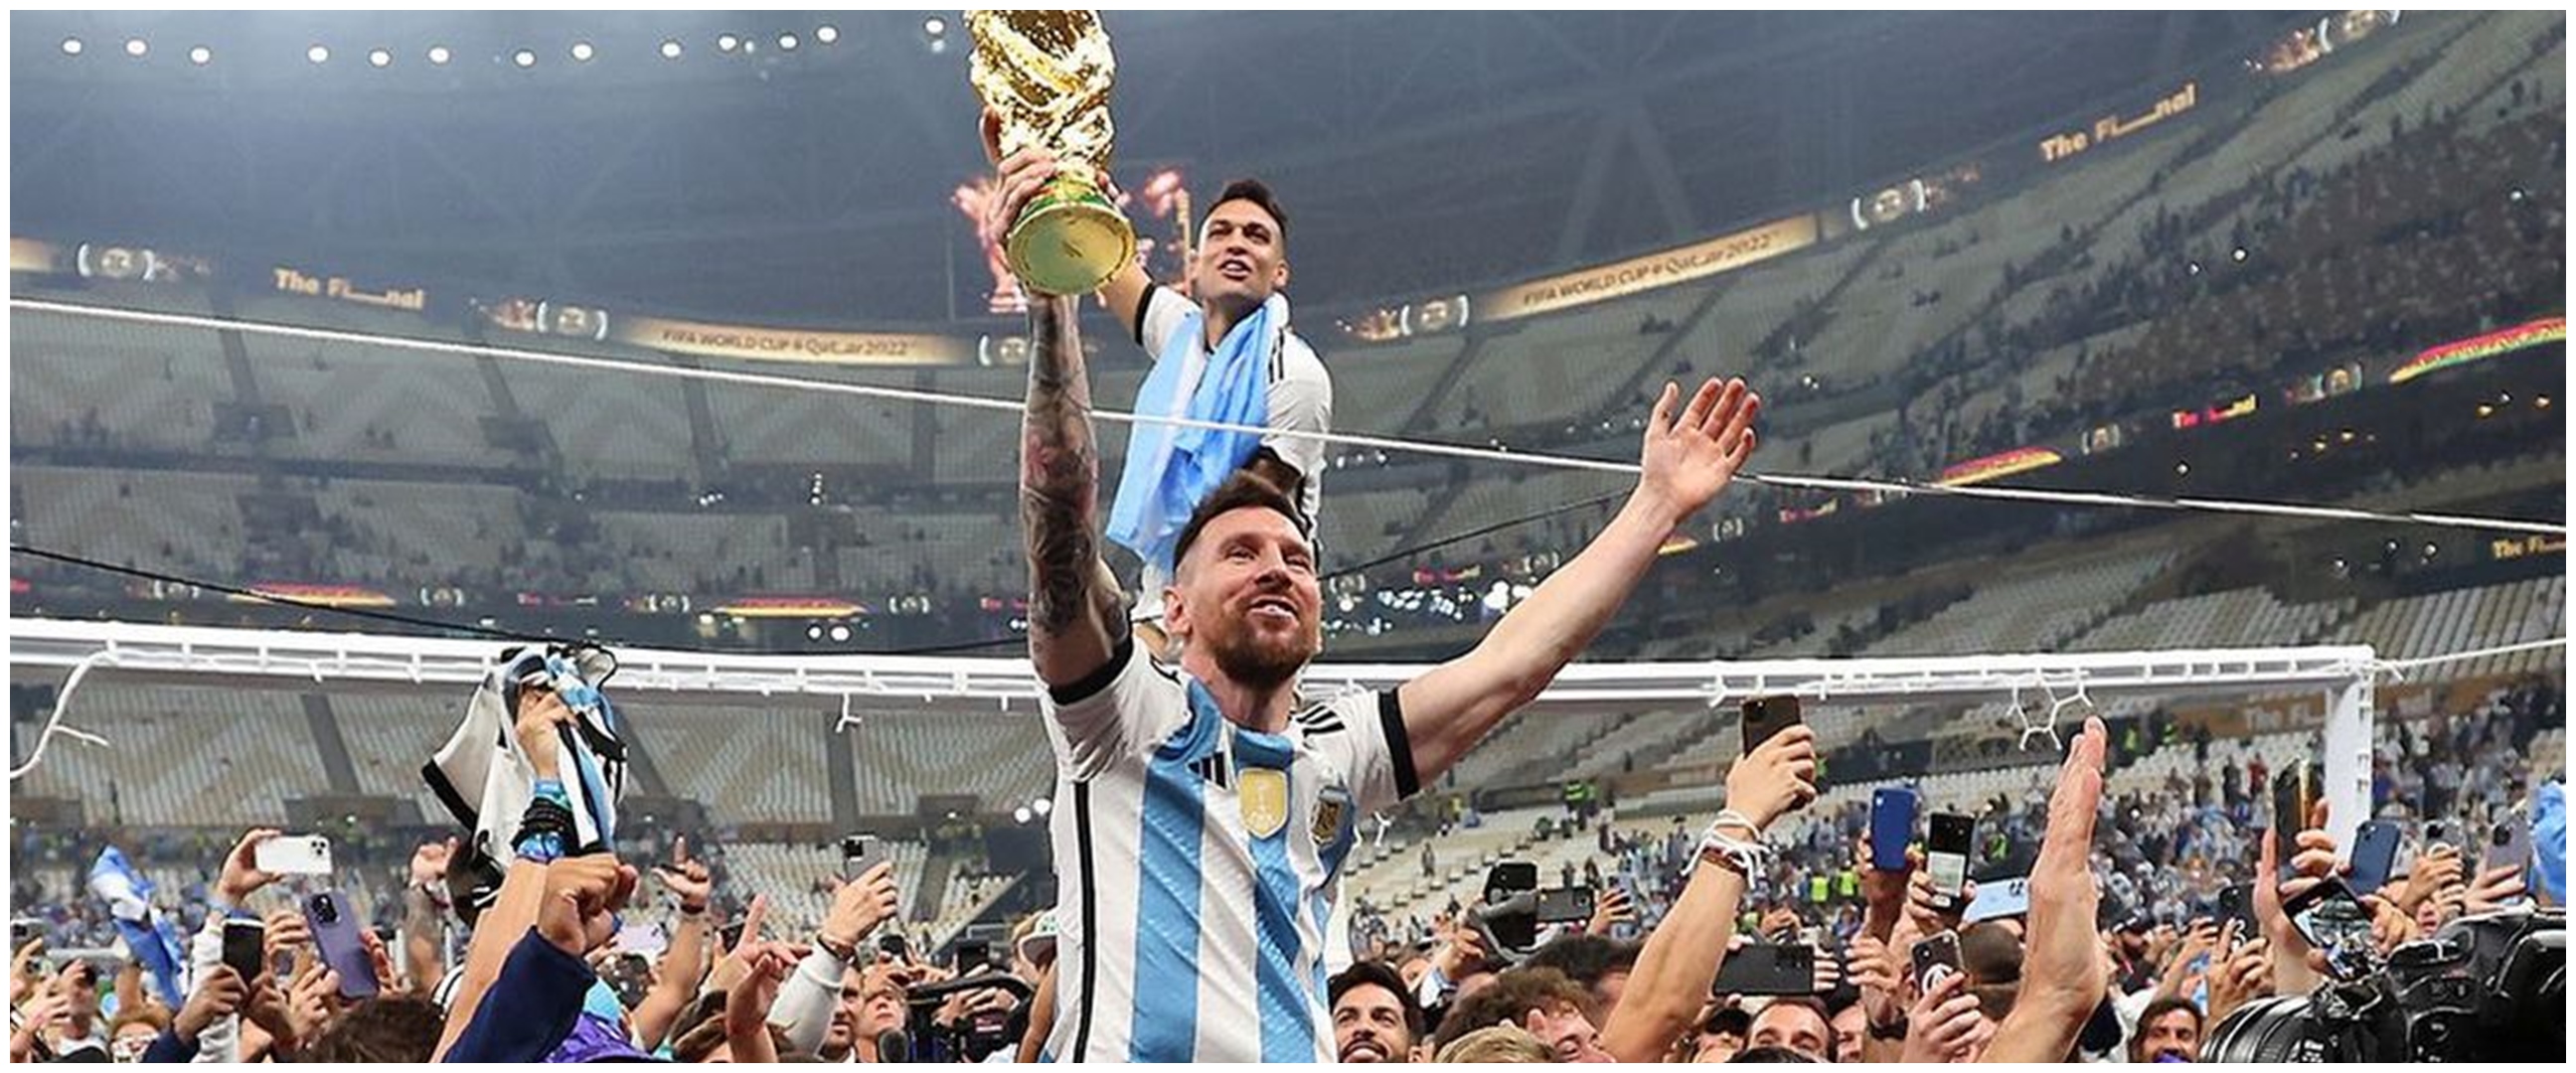 Argentina dapat hadiah juara Piala Dunia 2022 42 juta dollar Amerika, tengok besaran hadiah tiap tim